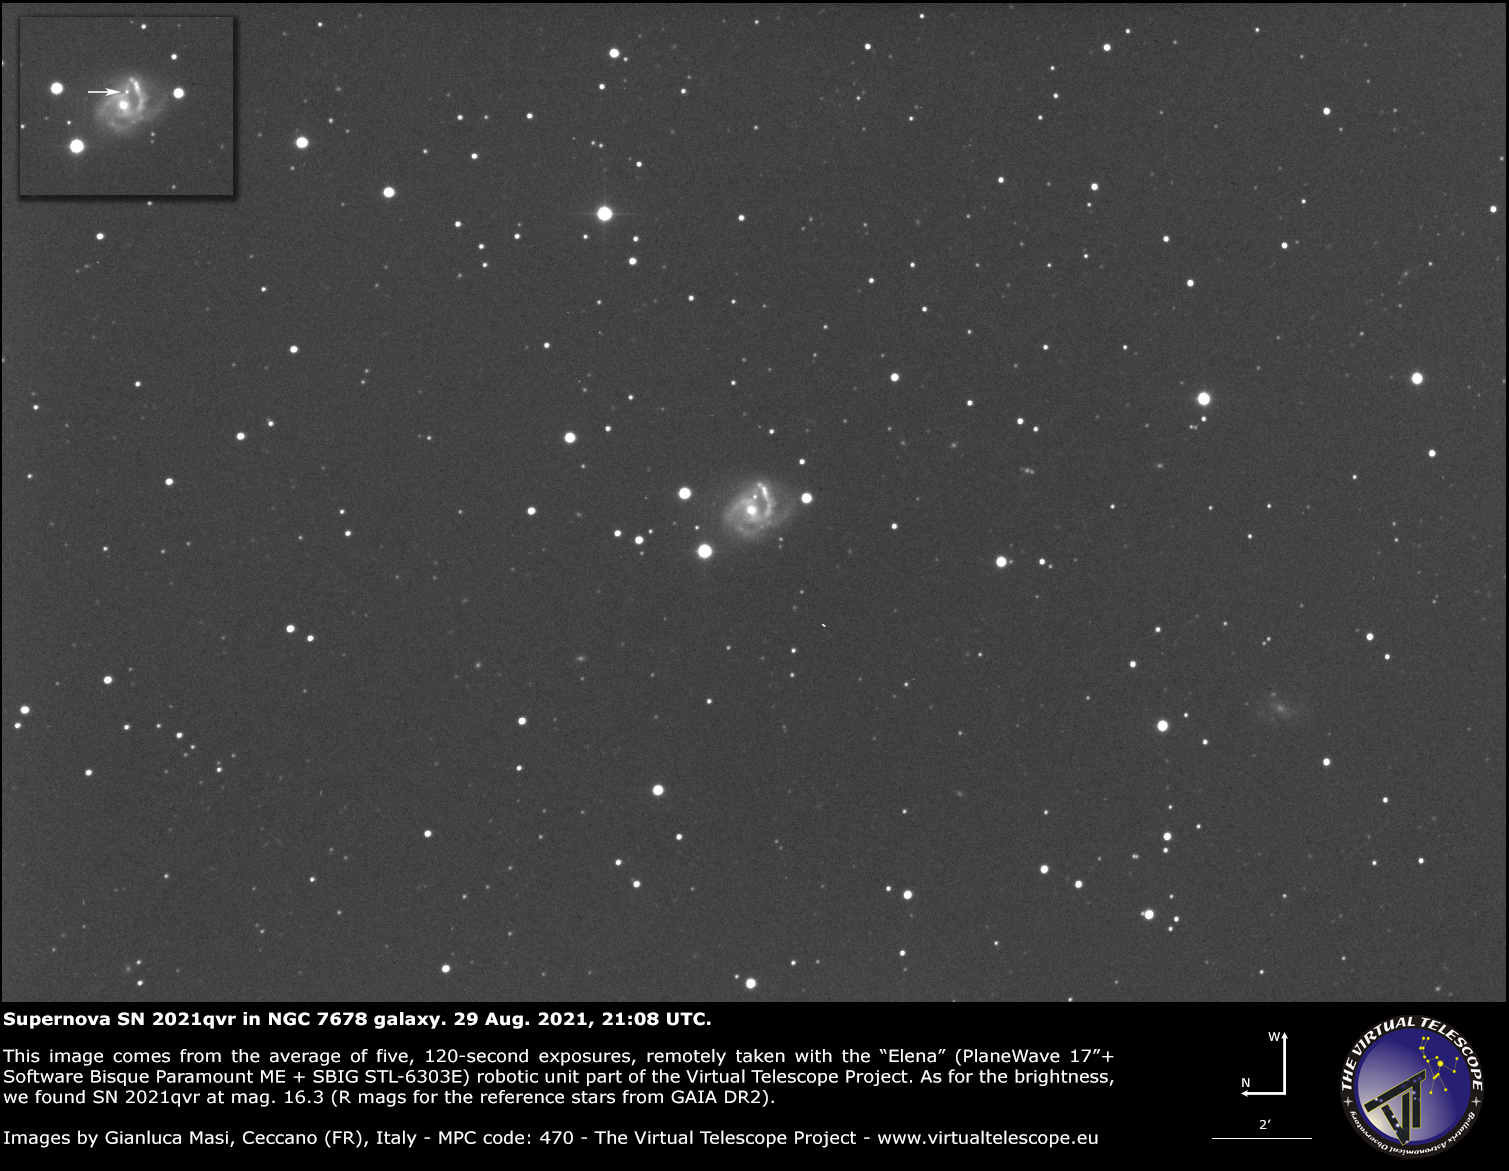 Supernova SN 2021qvr in NGC 7678 galaxy: 29 Aug. 2021.